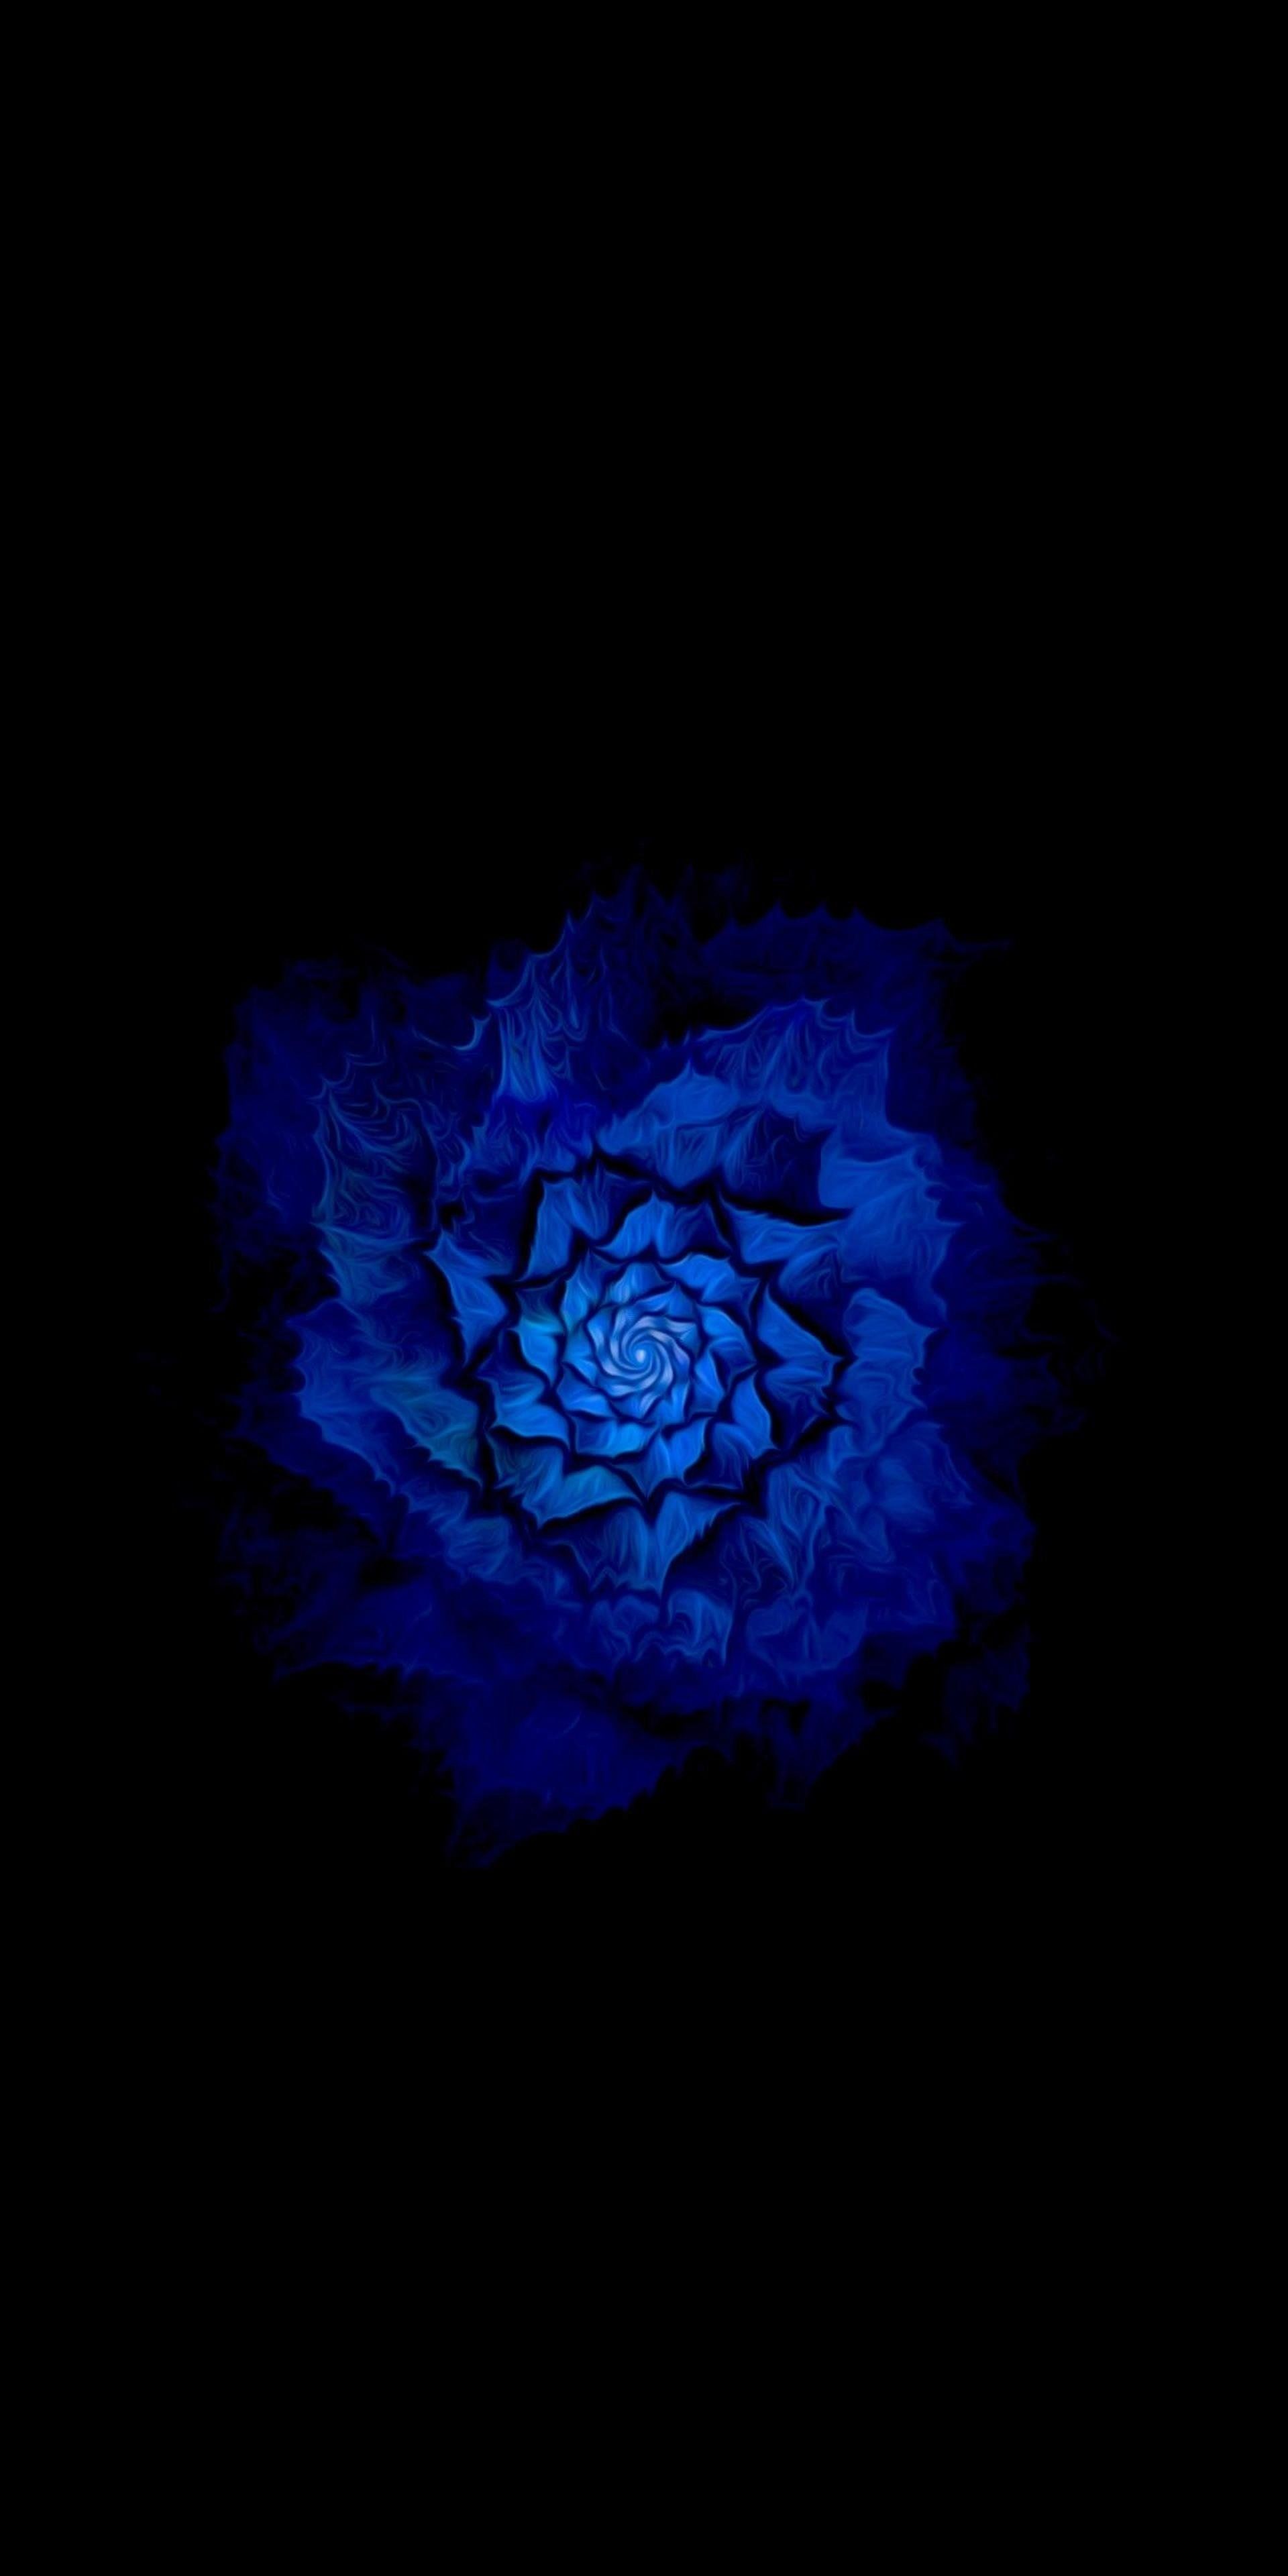 Bluish Flower Black Amoled Wallpaper 4k .oyebesmartest.com